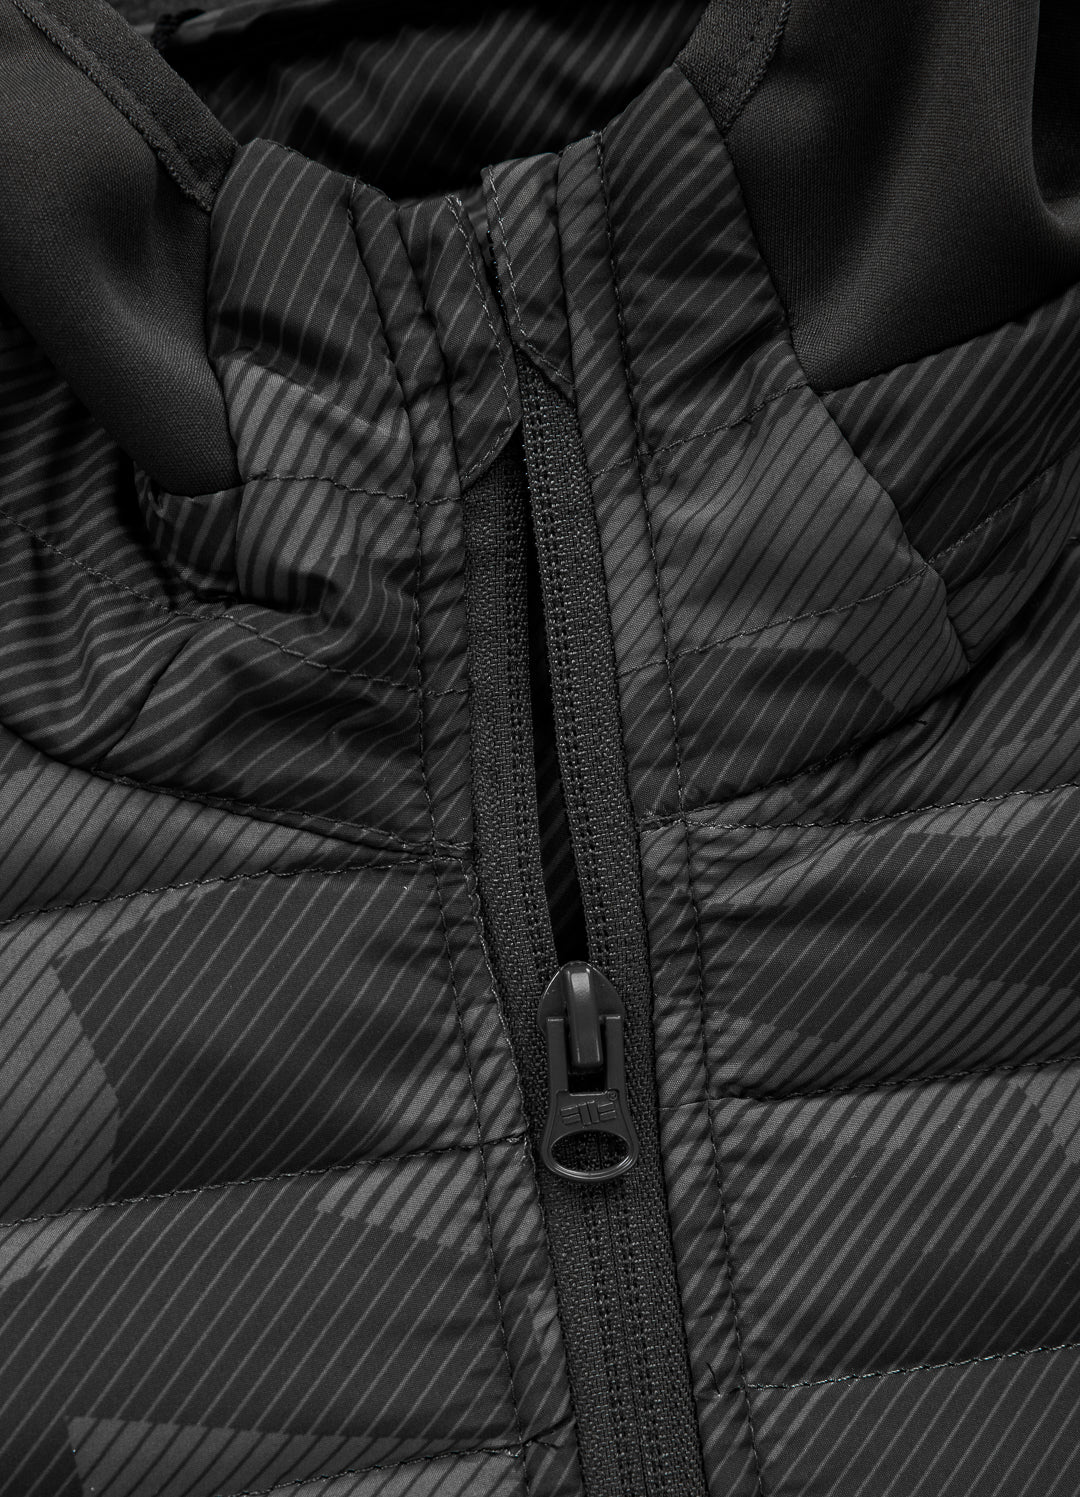 DILLARD Black Camo Jacket